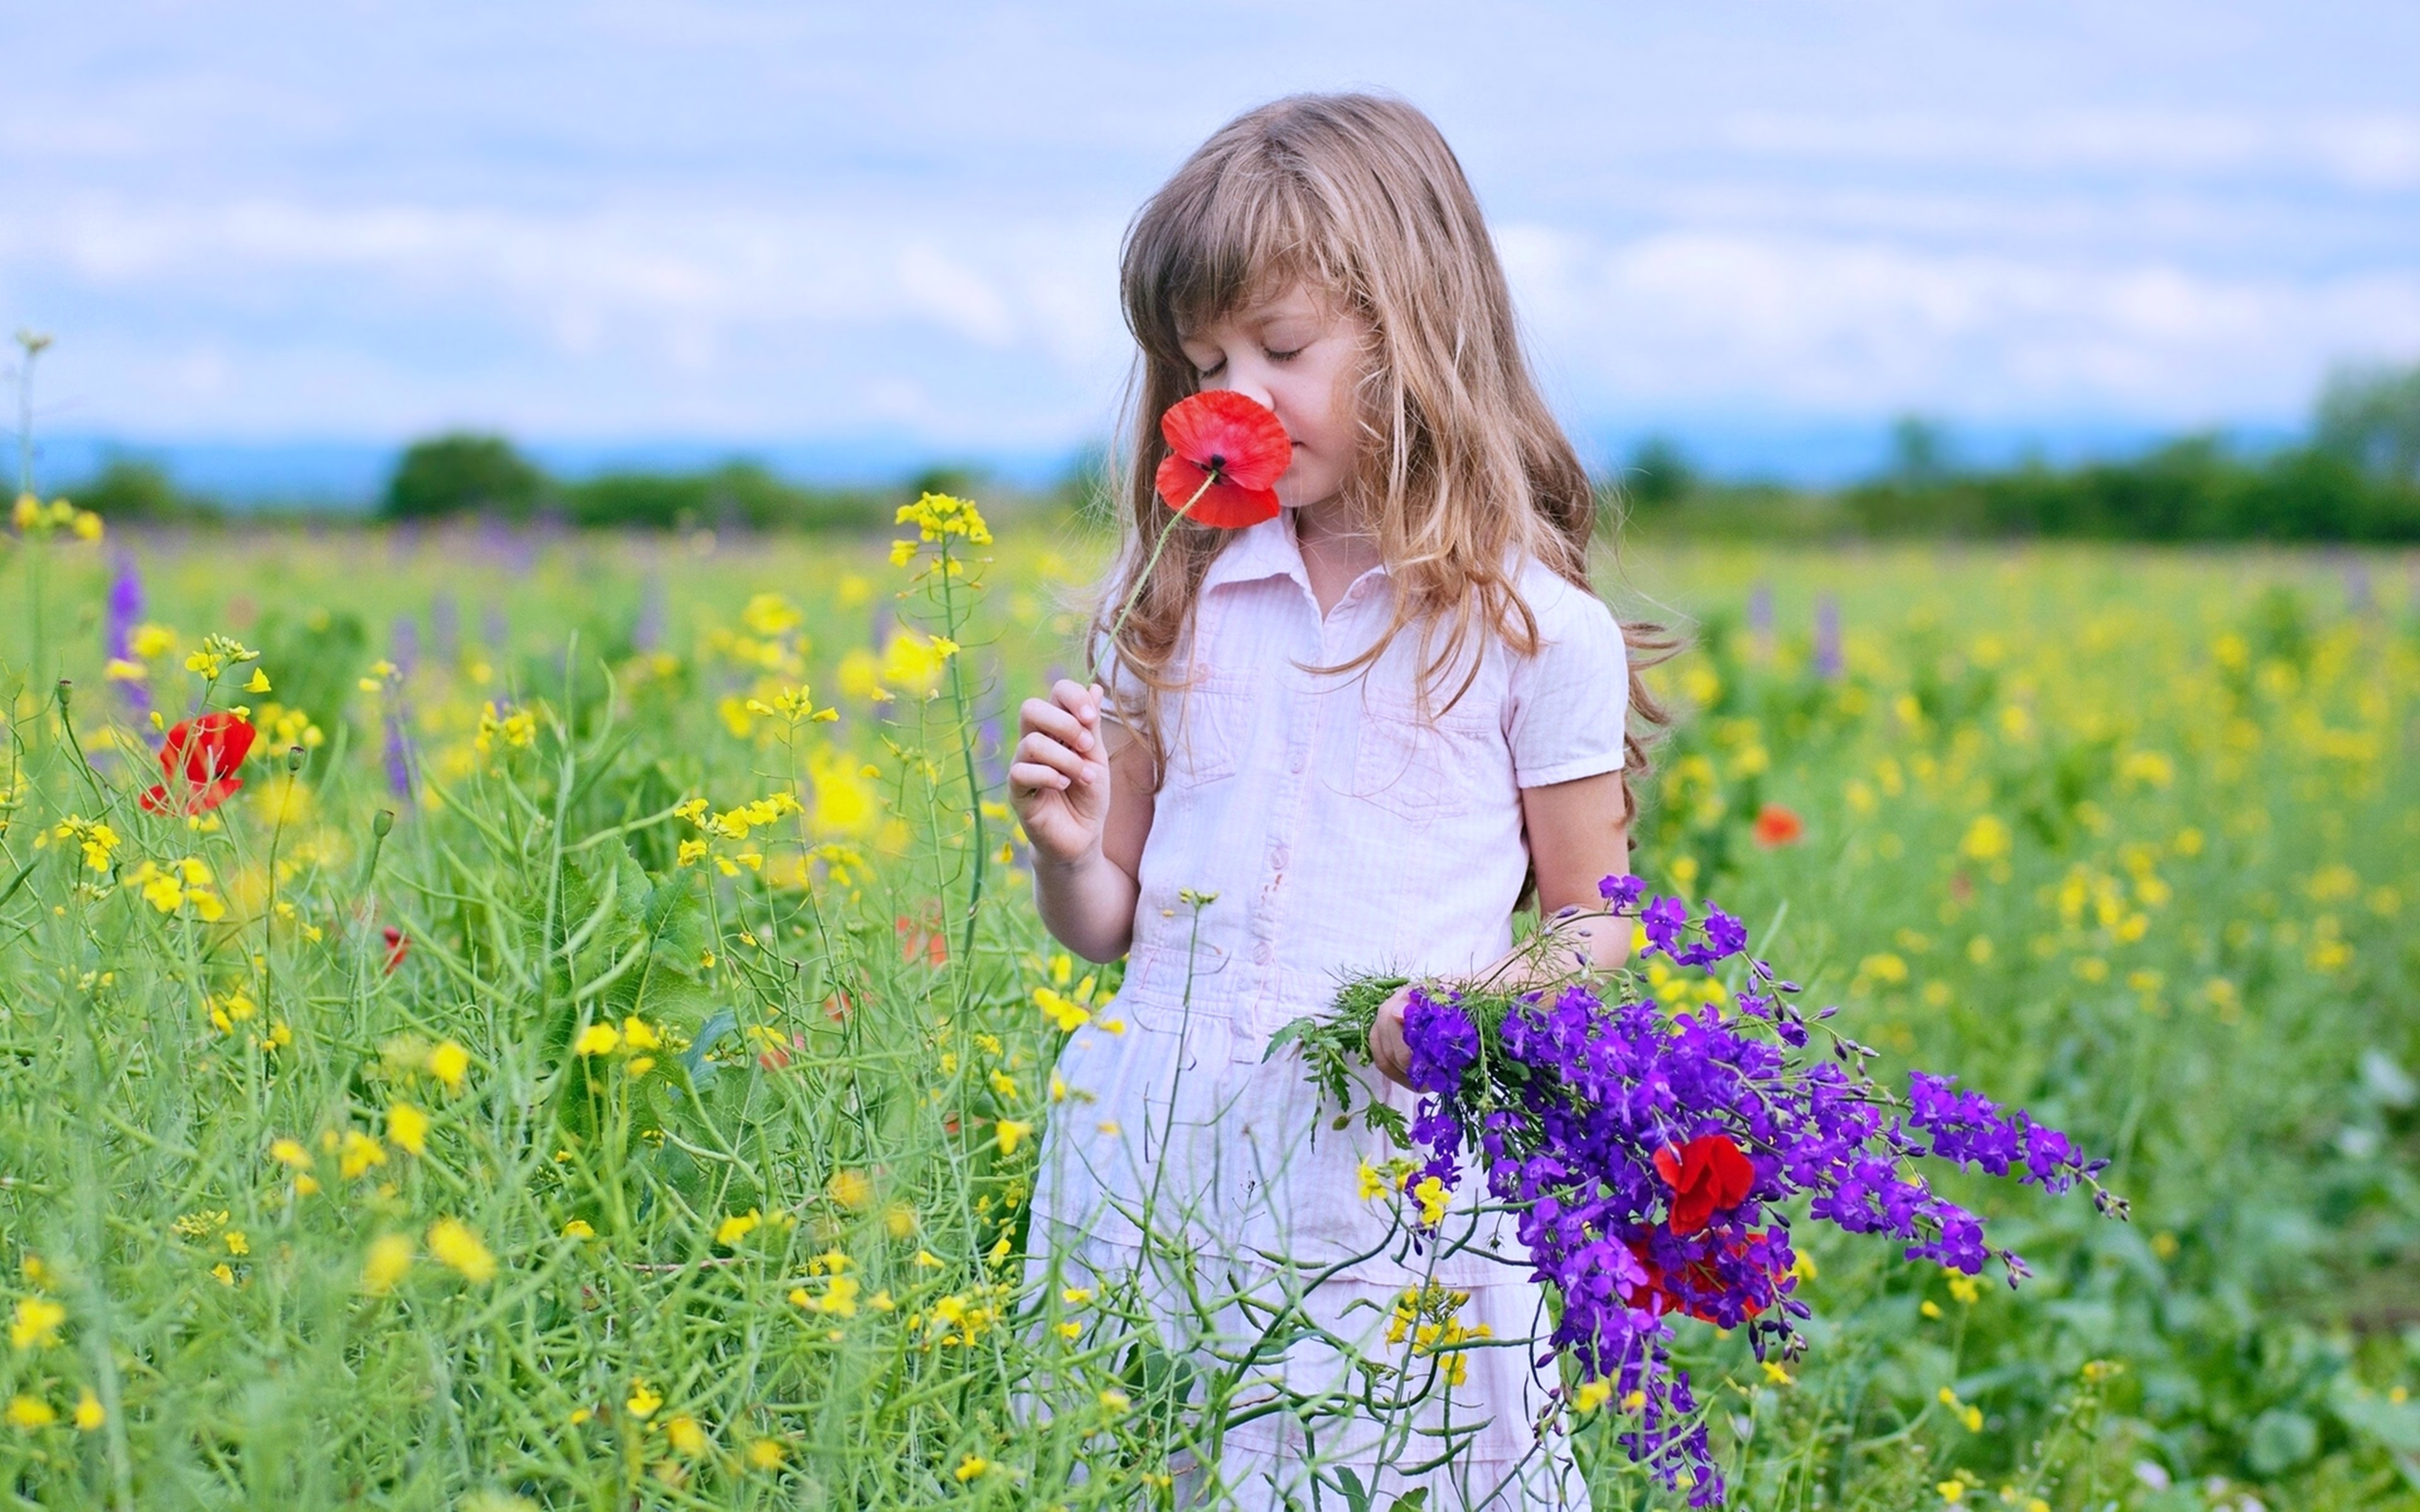 Kids children nature landscapes flowers fields spring joy fun